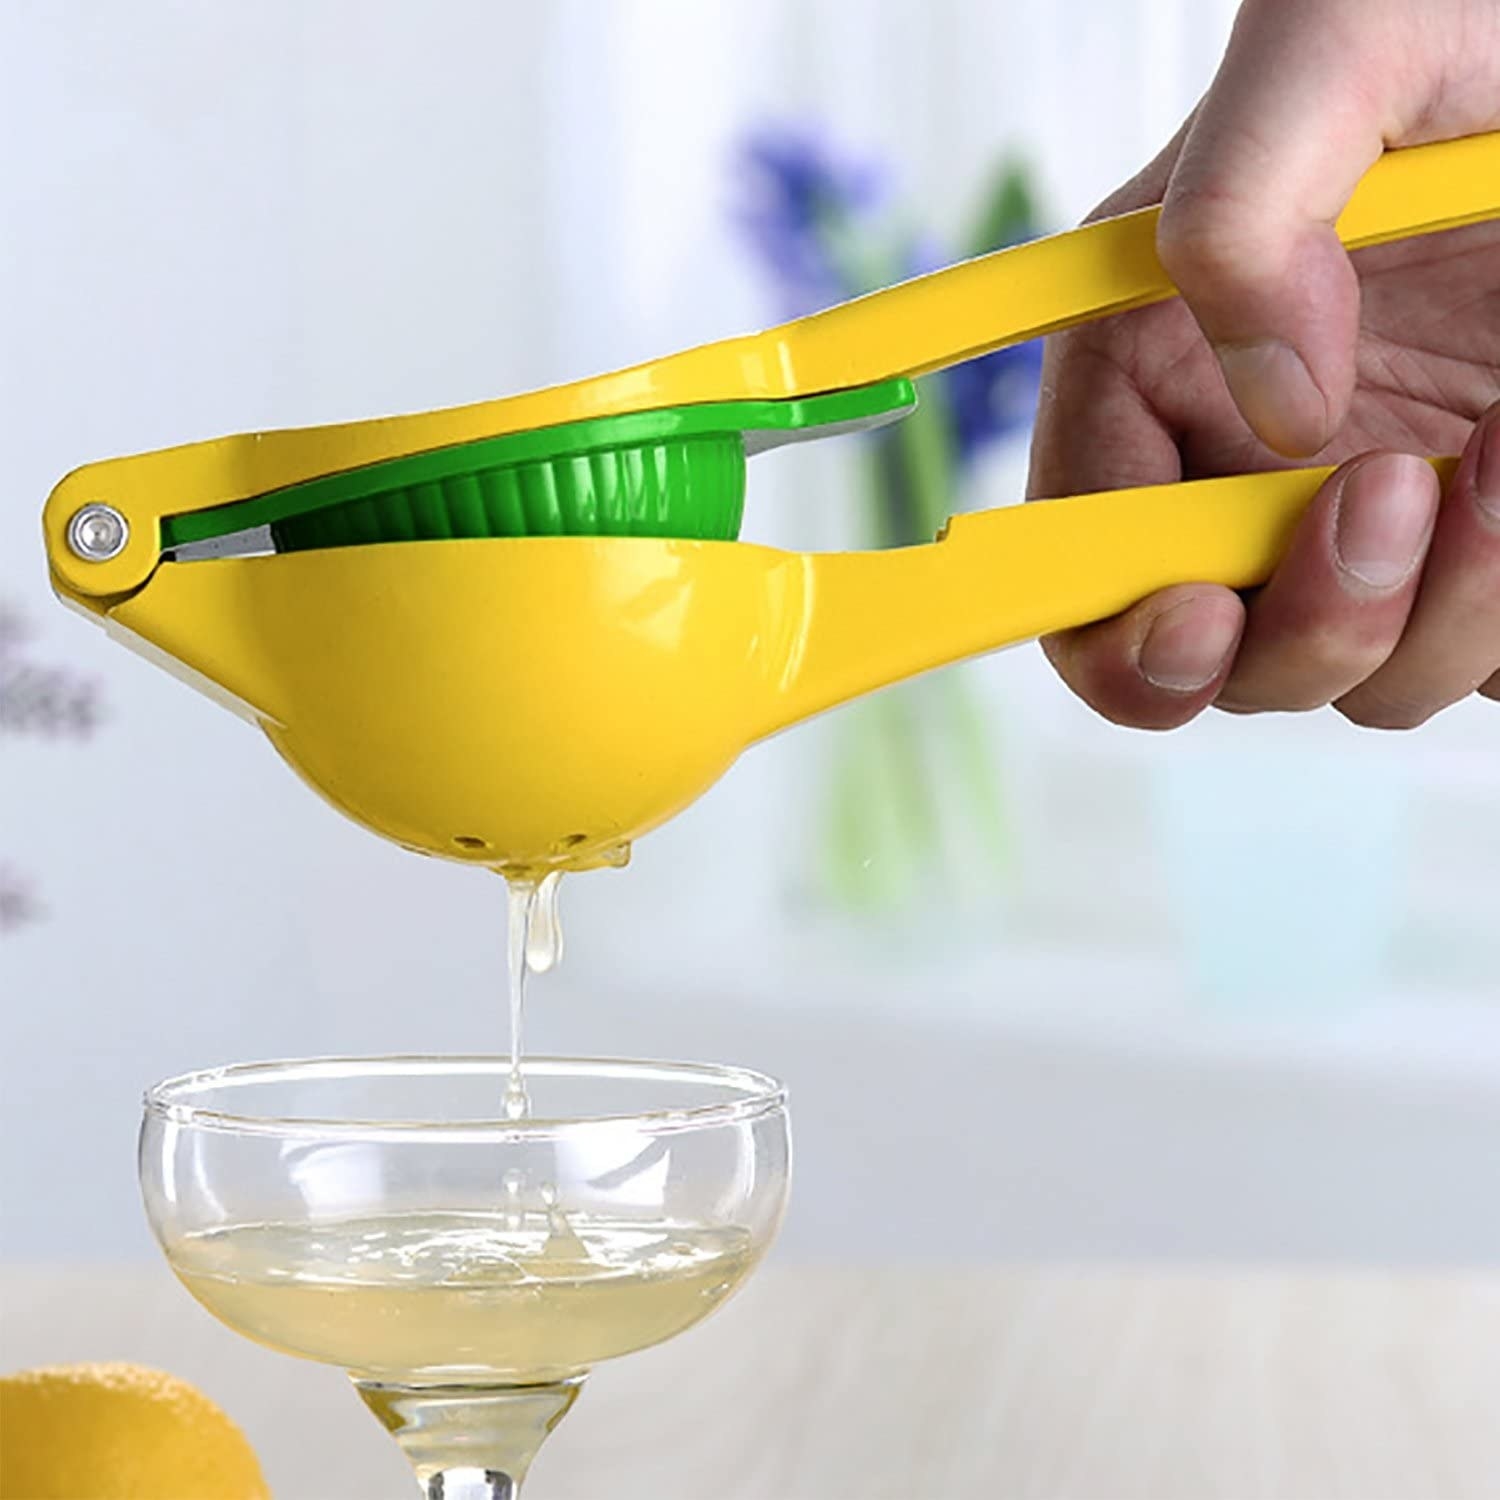 a person using the citrus squeezer to juice a lemon